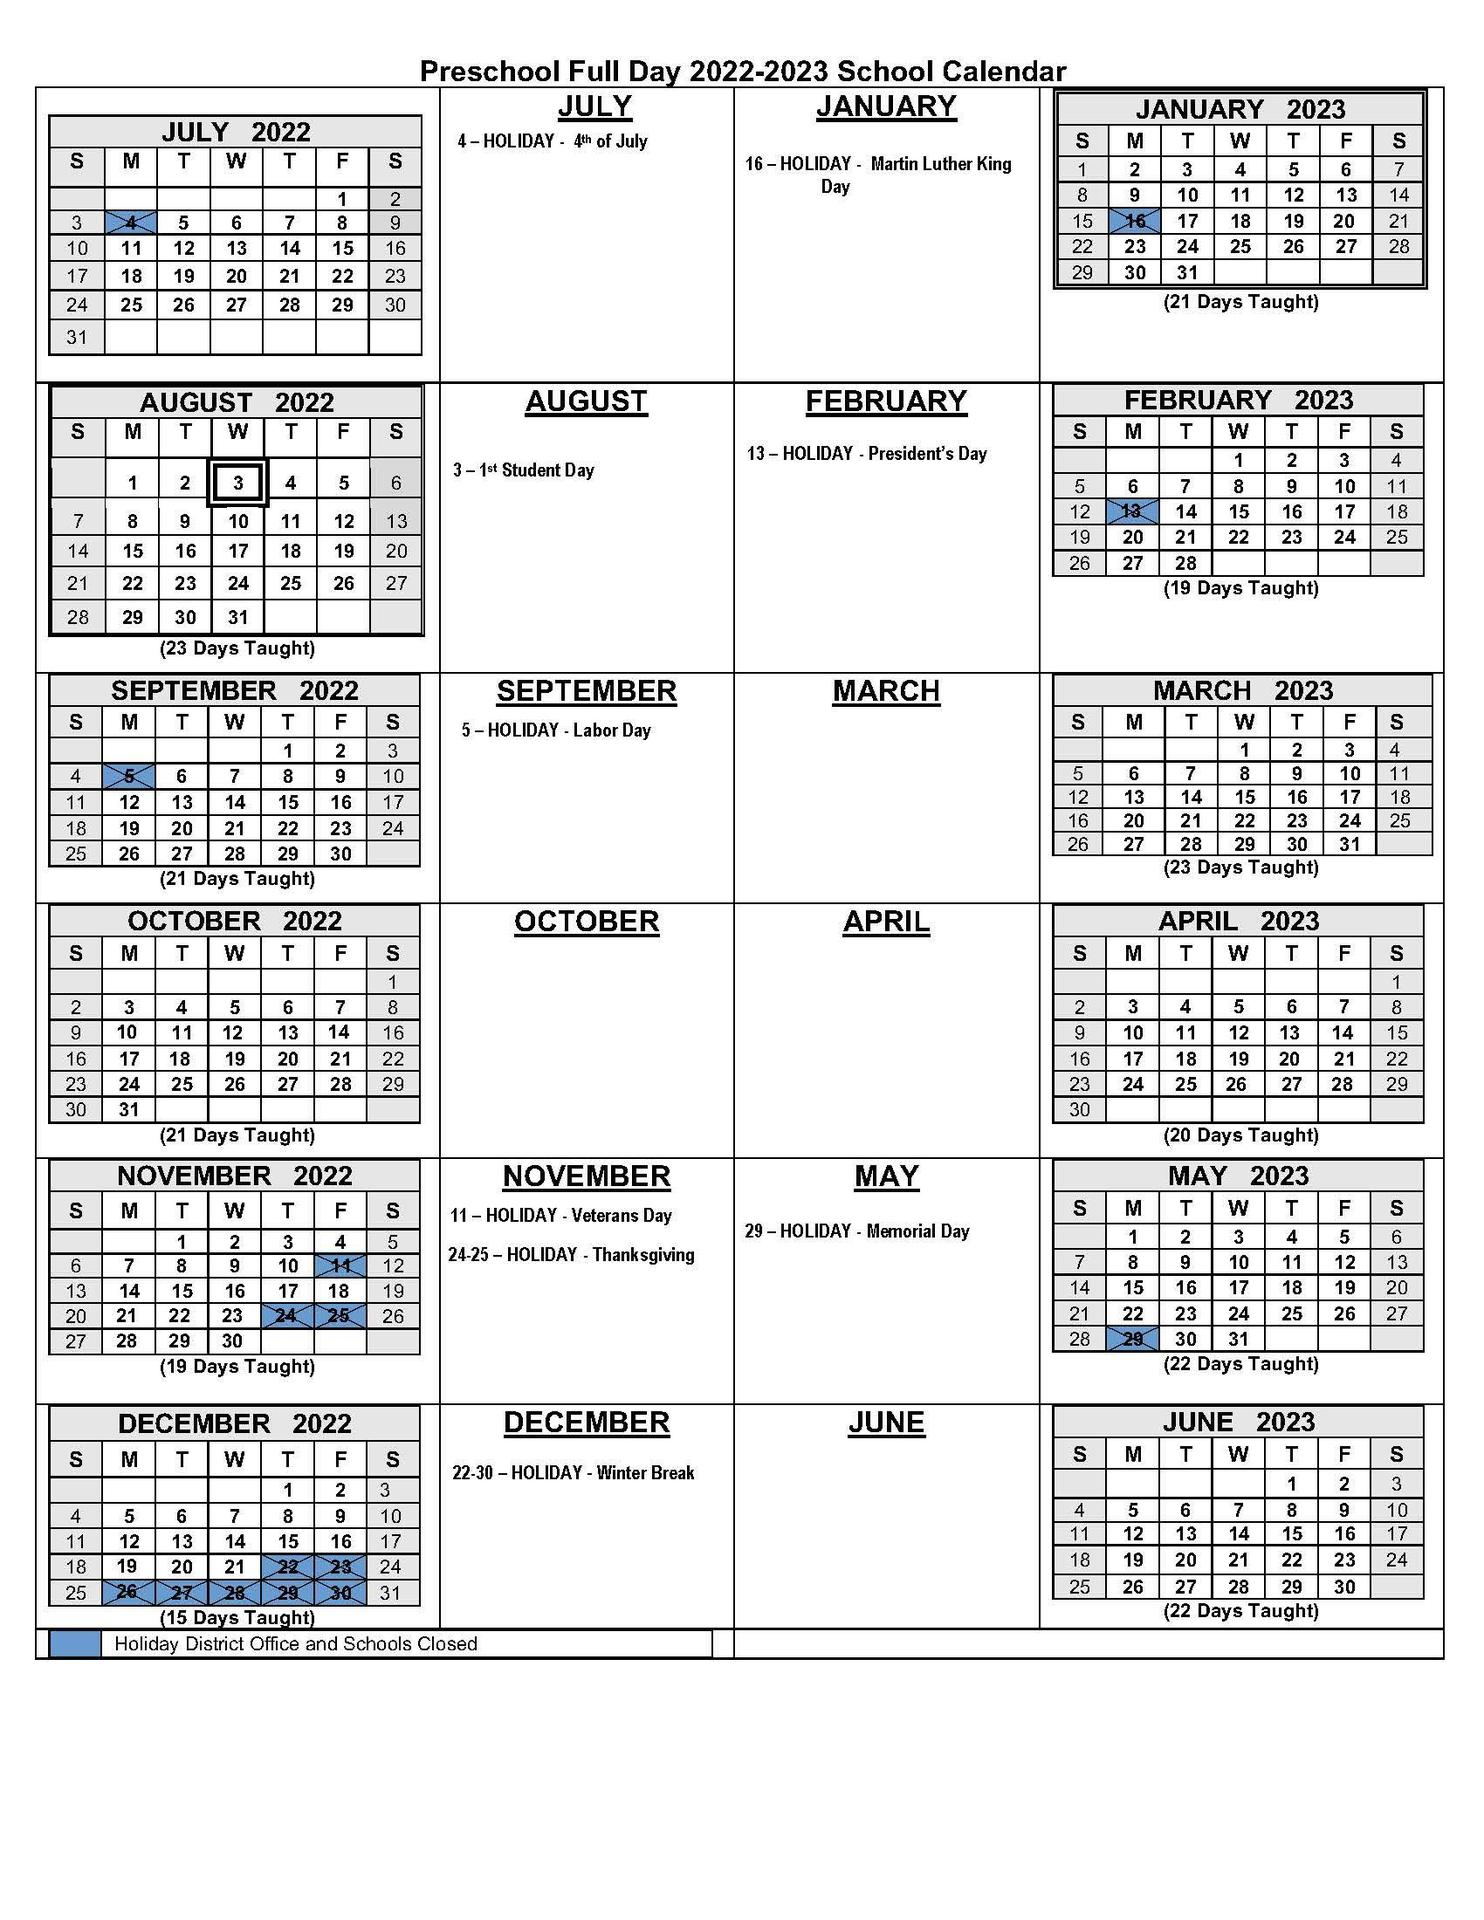 sweetwater-school-district-calendar-2022-2023-2022-schoolcalendars